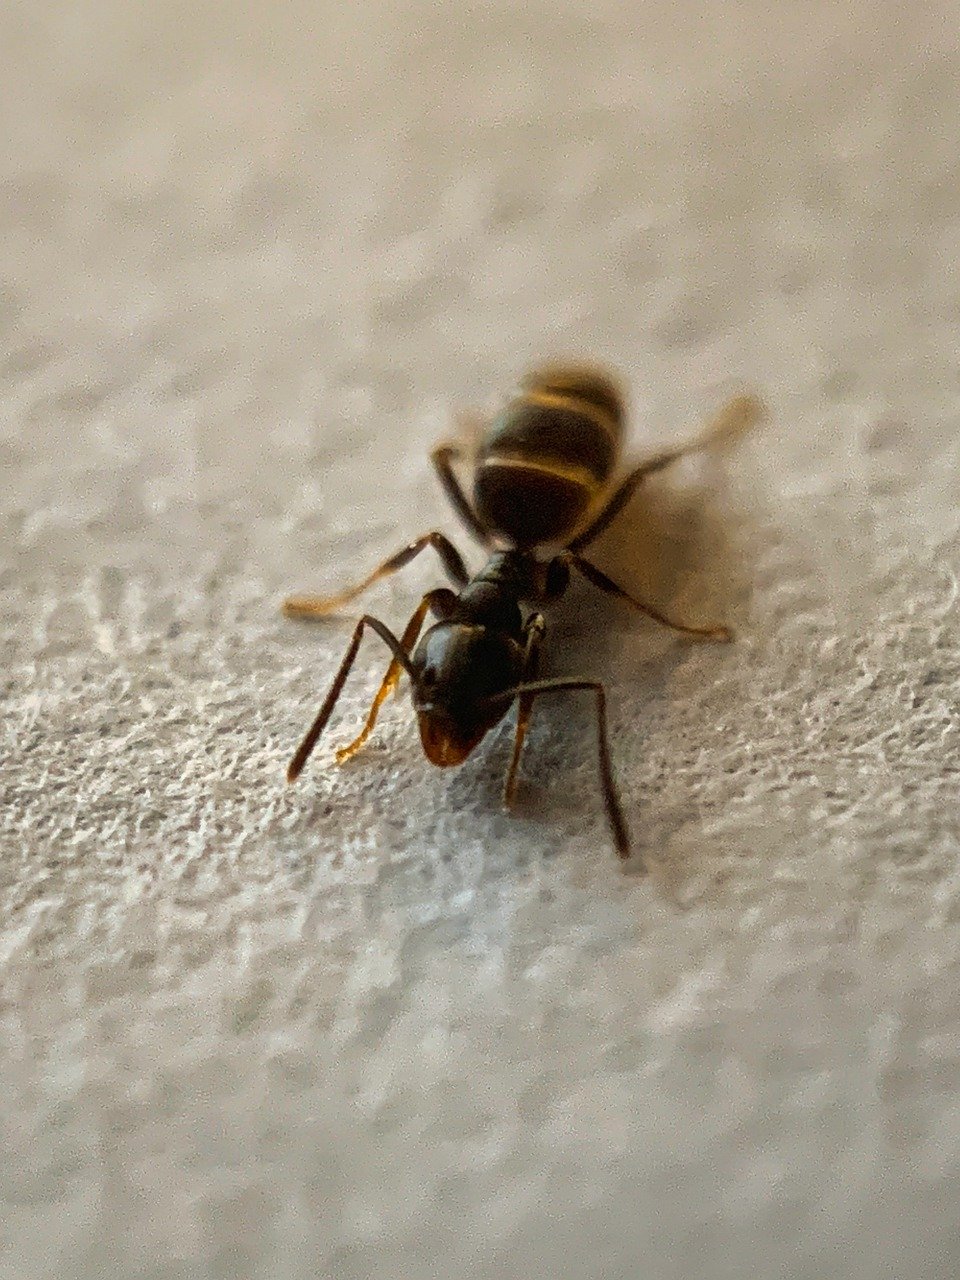 carpenter ant on carpet